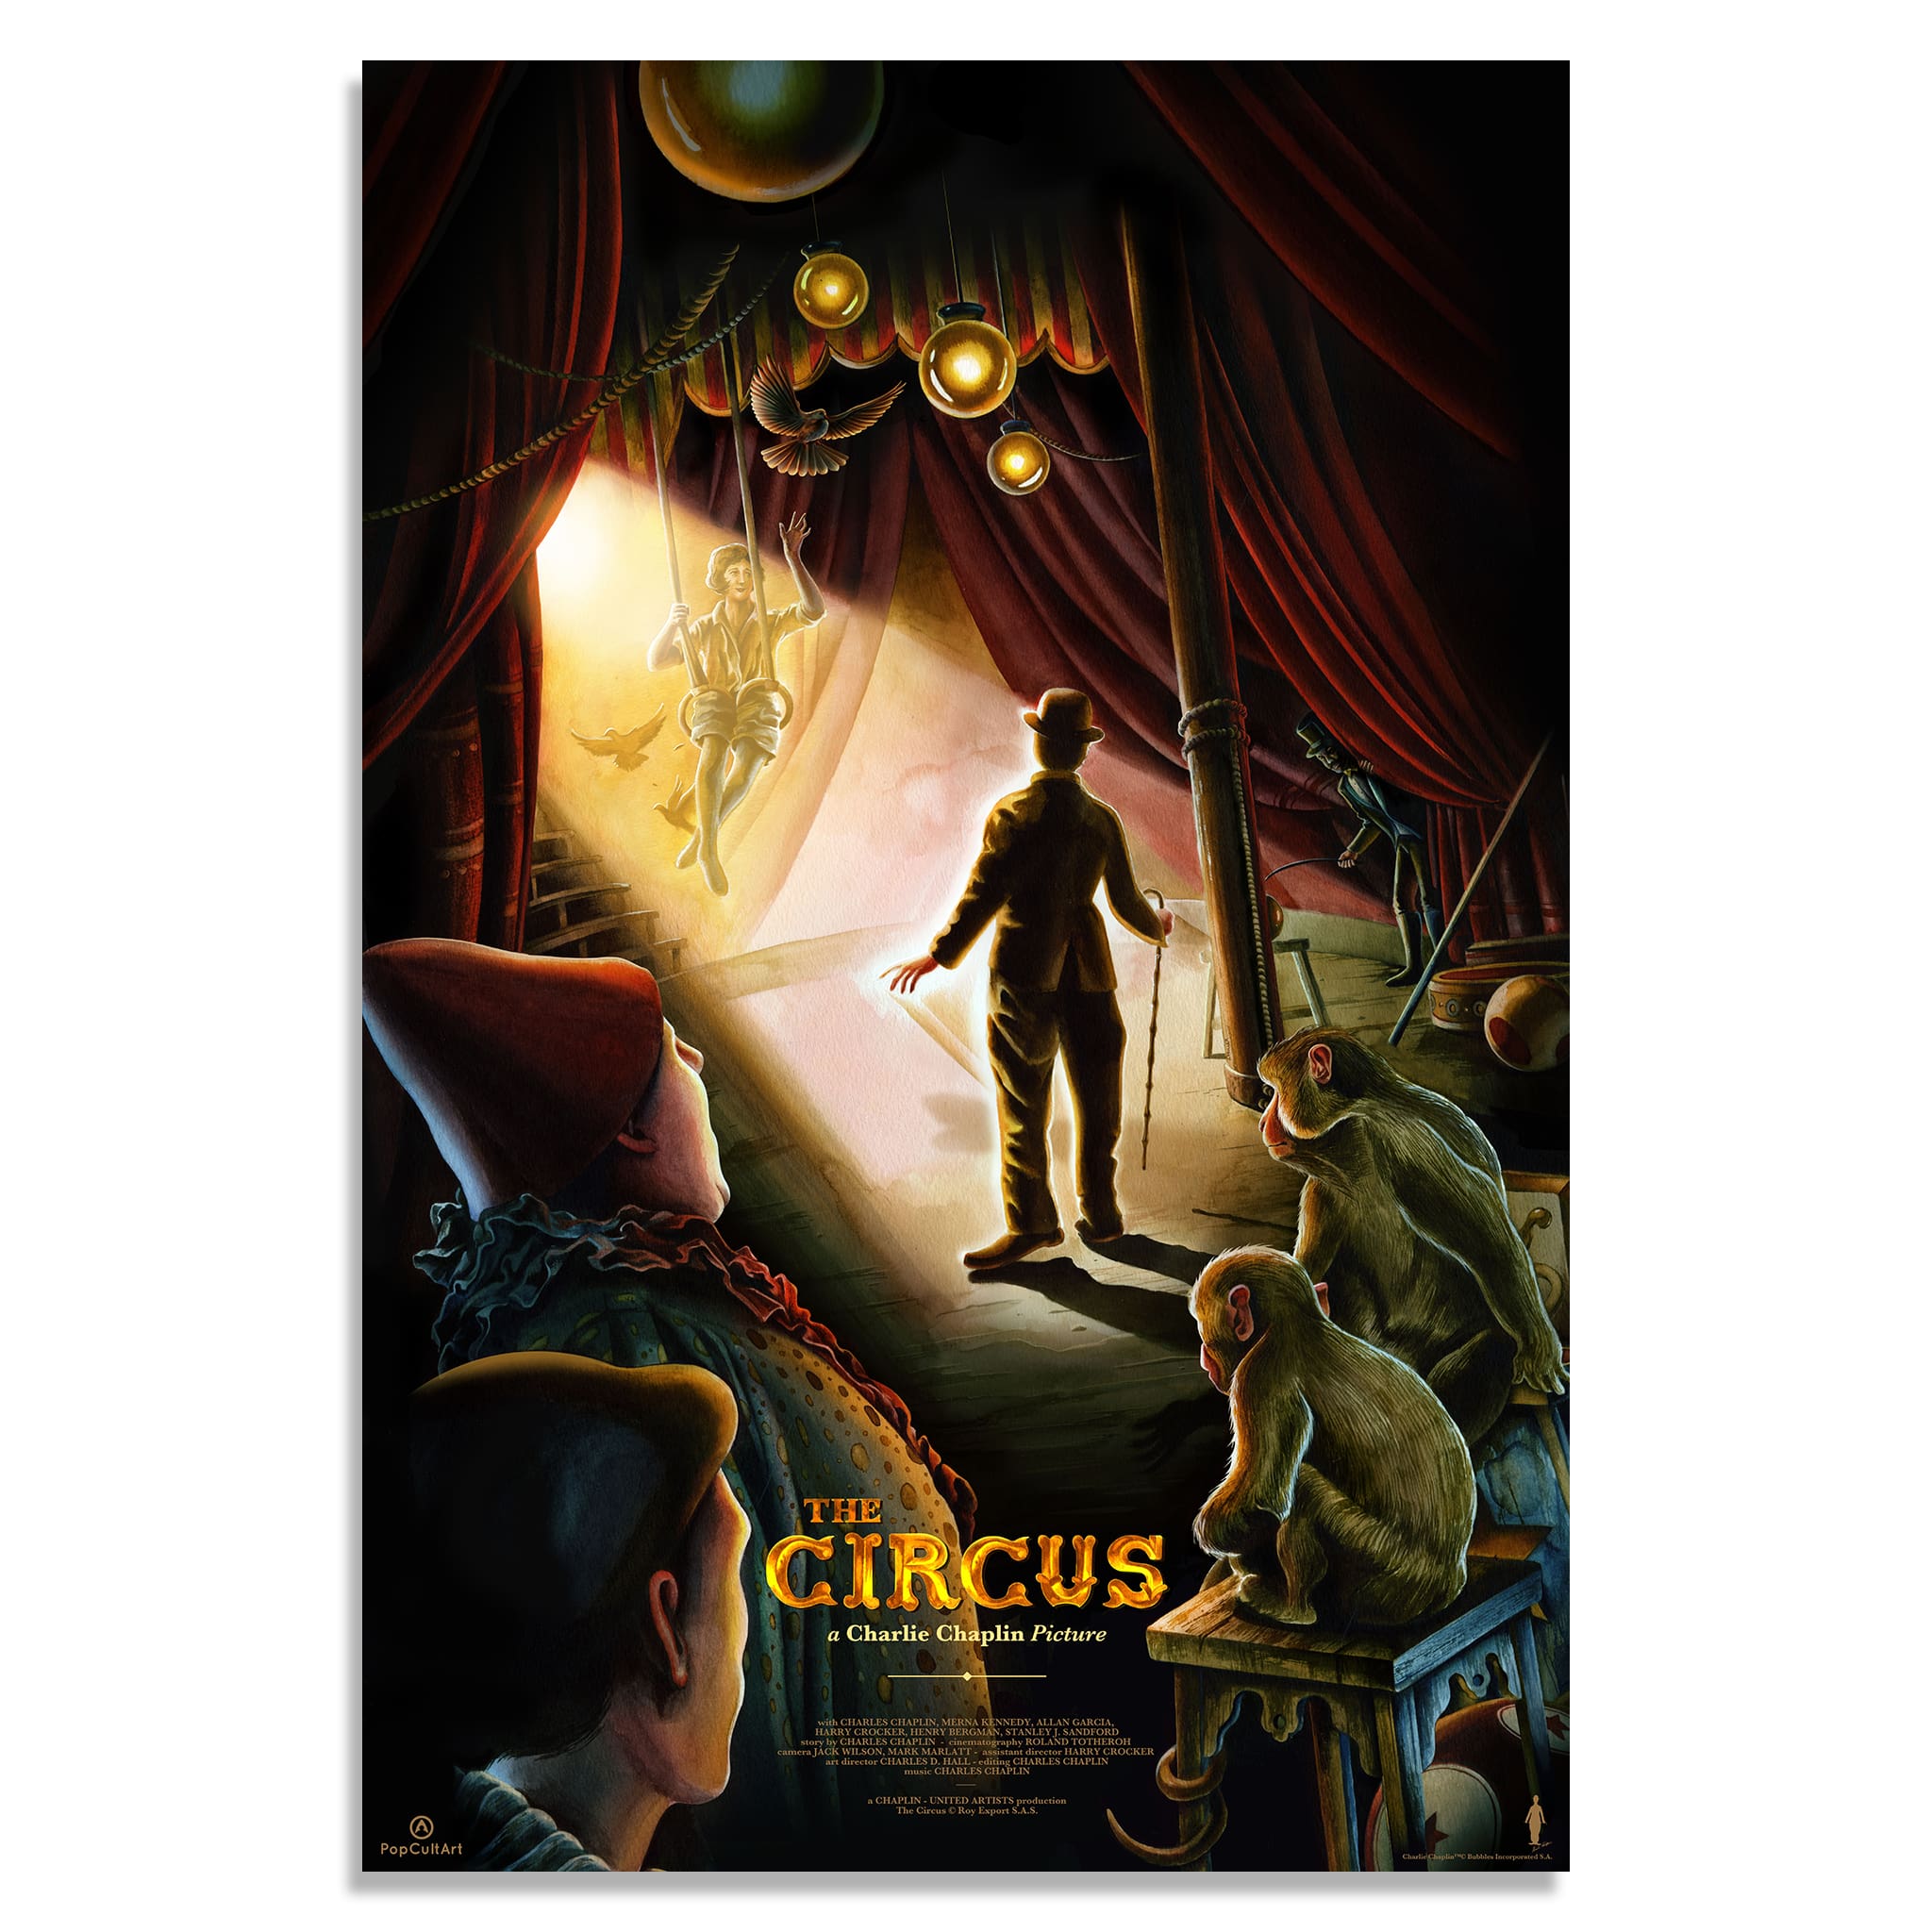 Charlie Chaplin's "The Circus" (1928) by Jérémy Pailler | PopCultArt